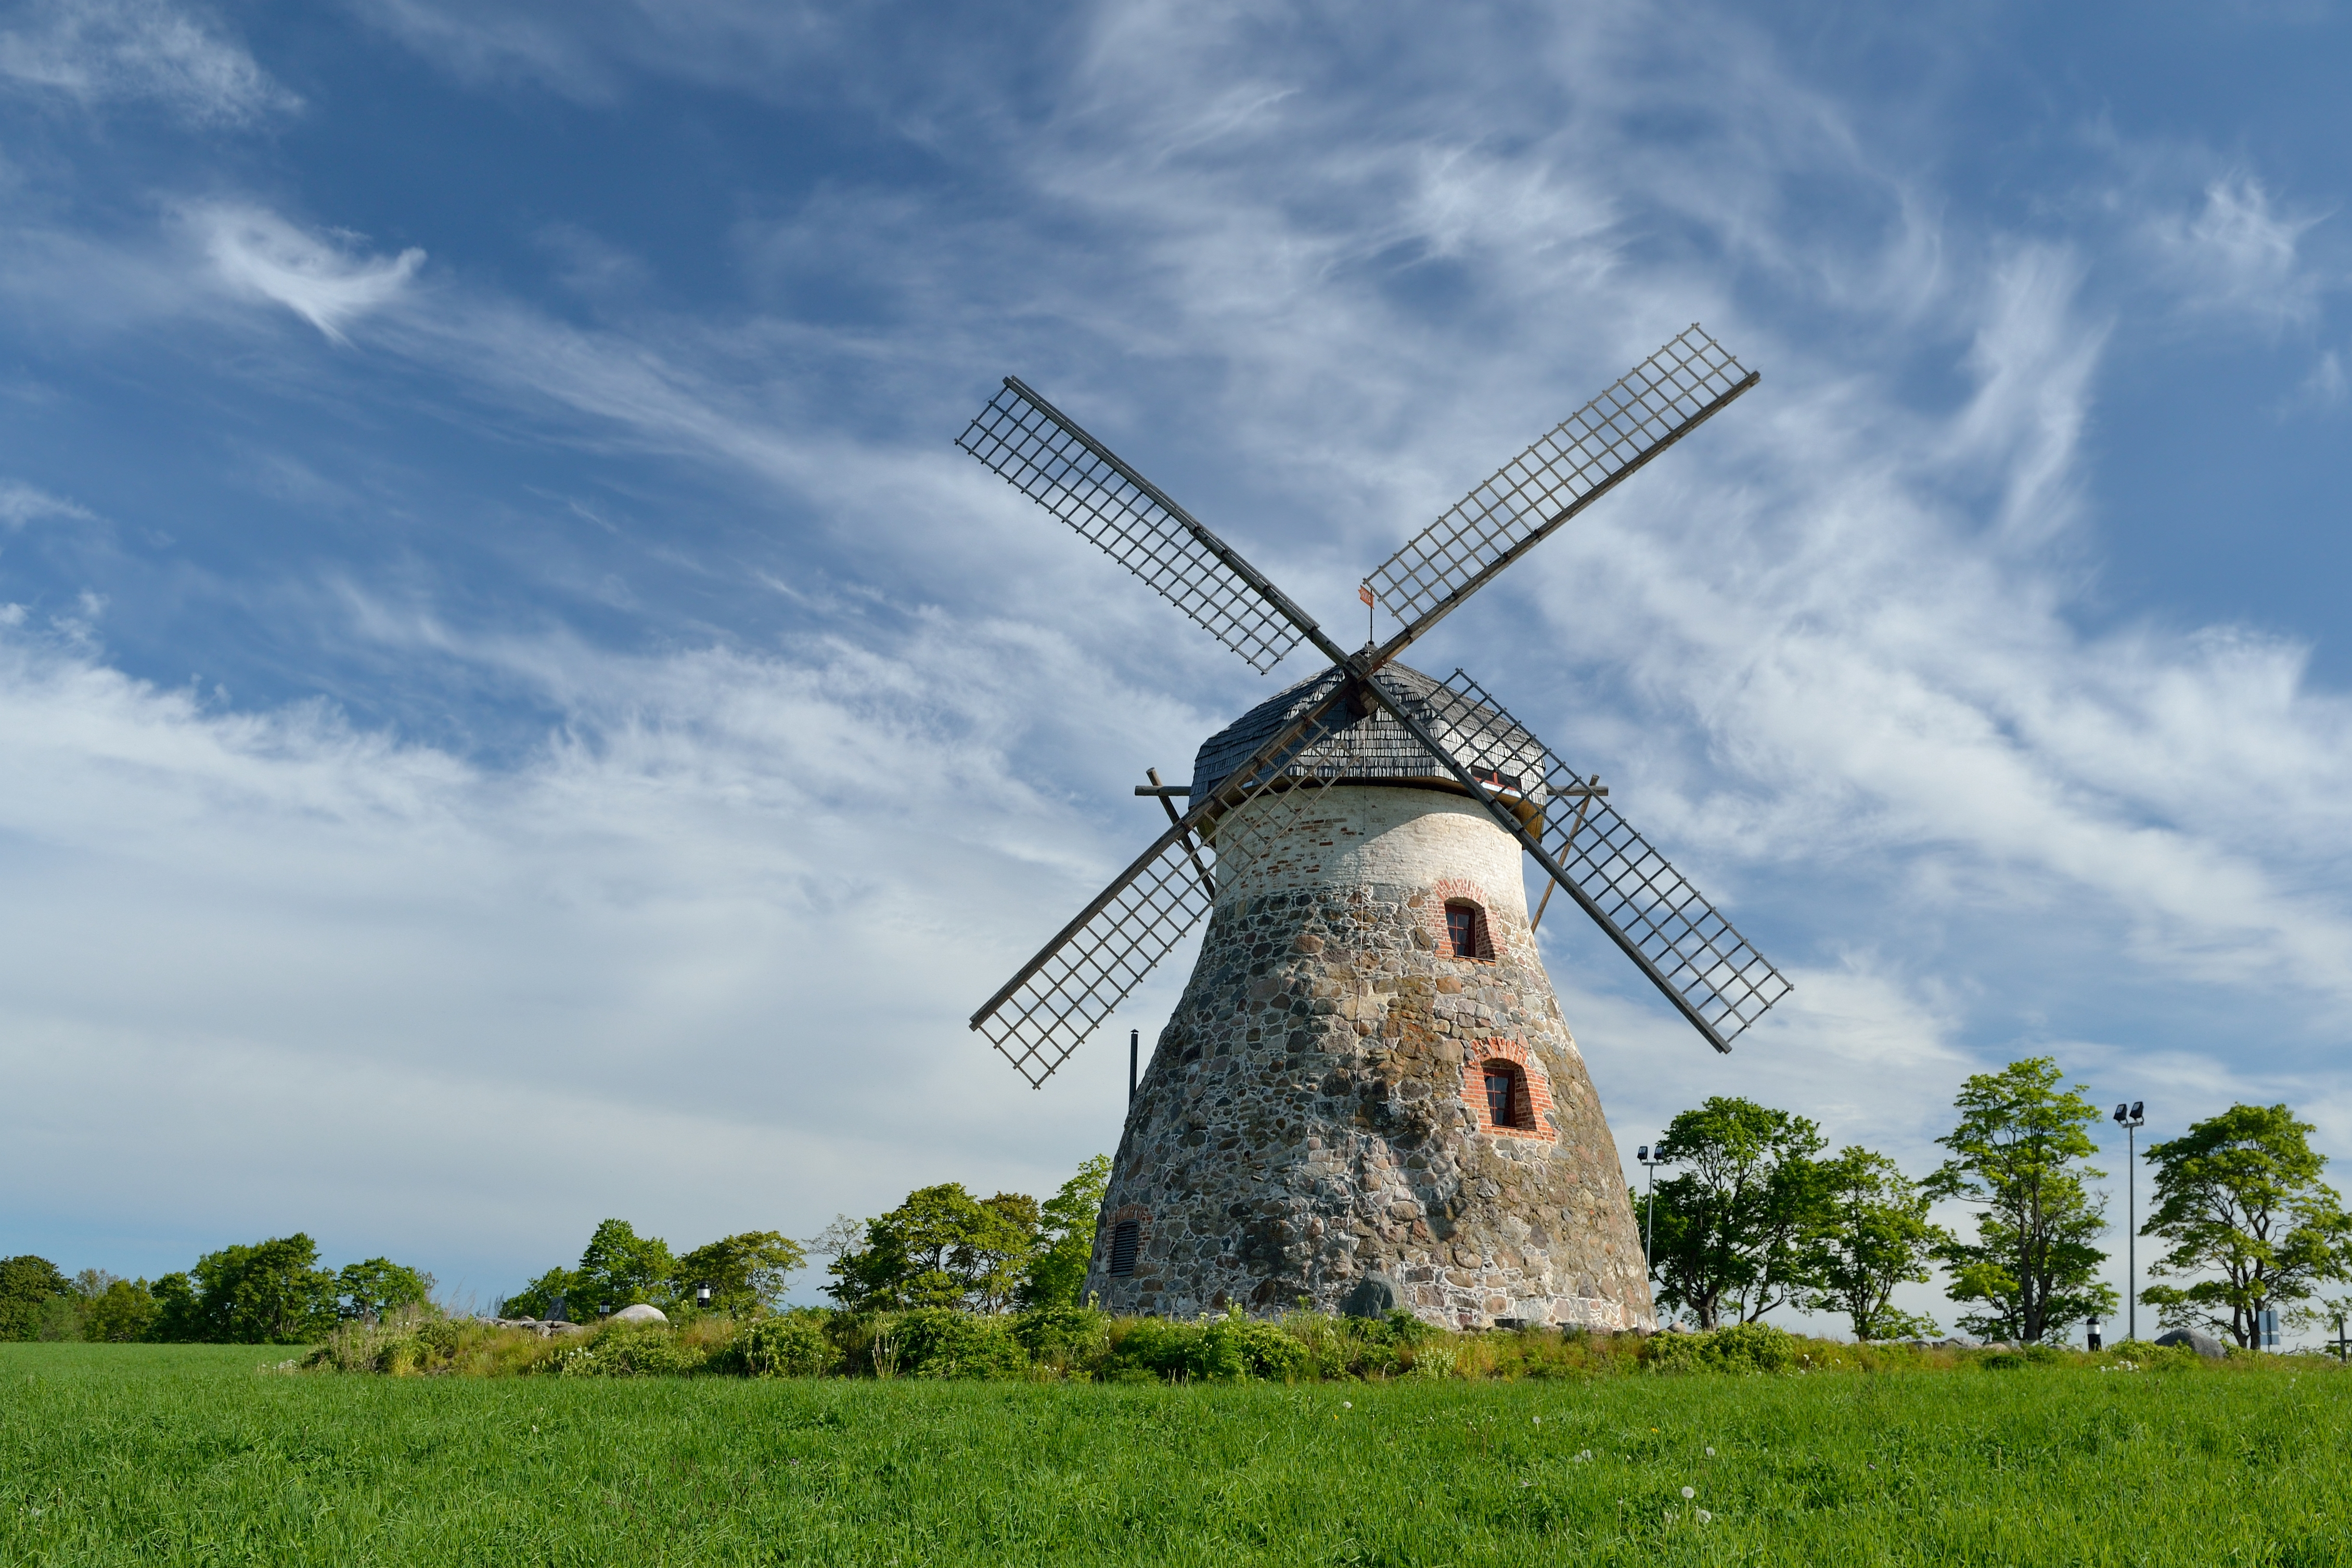 Windmill photo